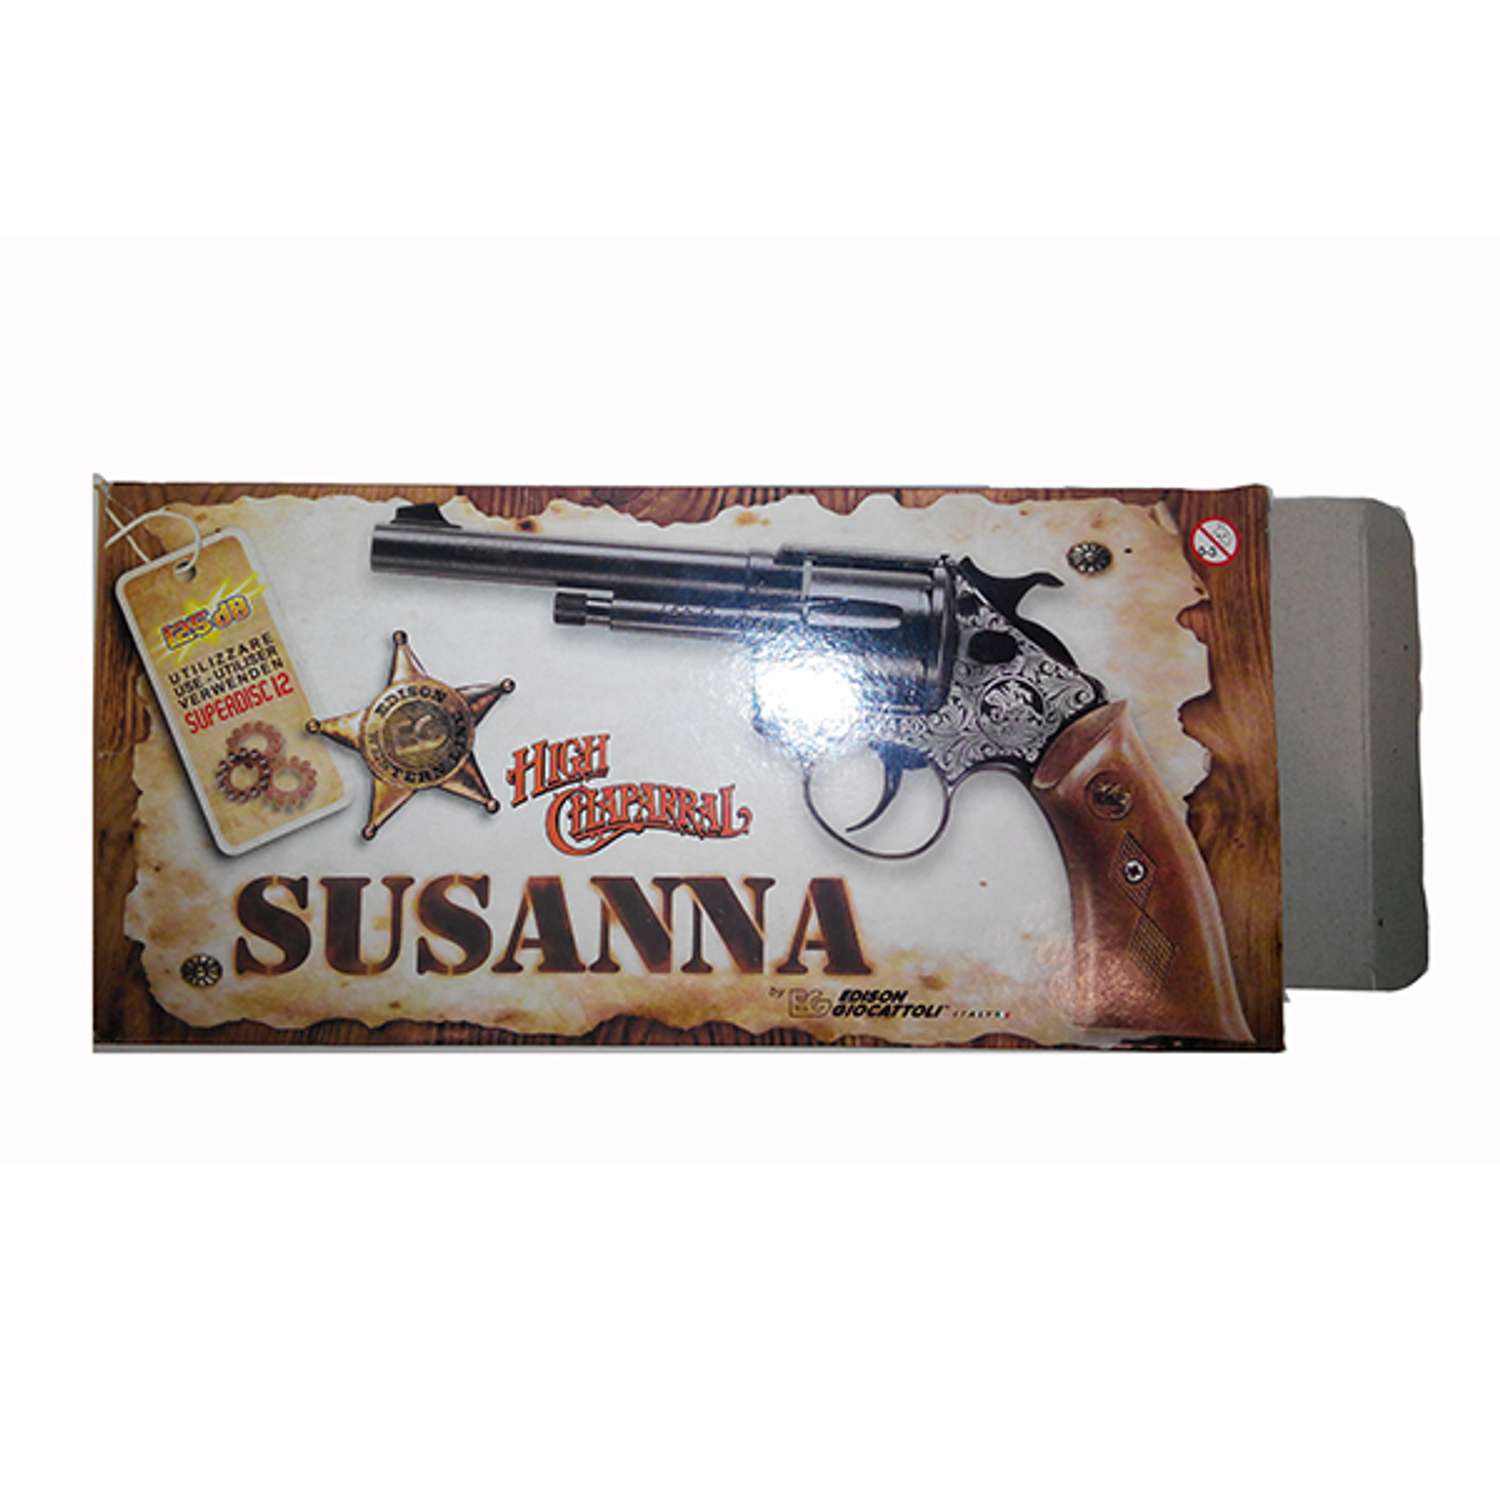 Пистолет Edison Giocattoli 12 зарядов Susanna Metall Western 22.5 см - фото 2